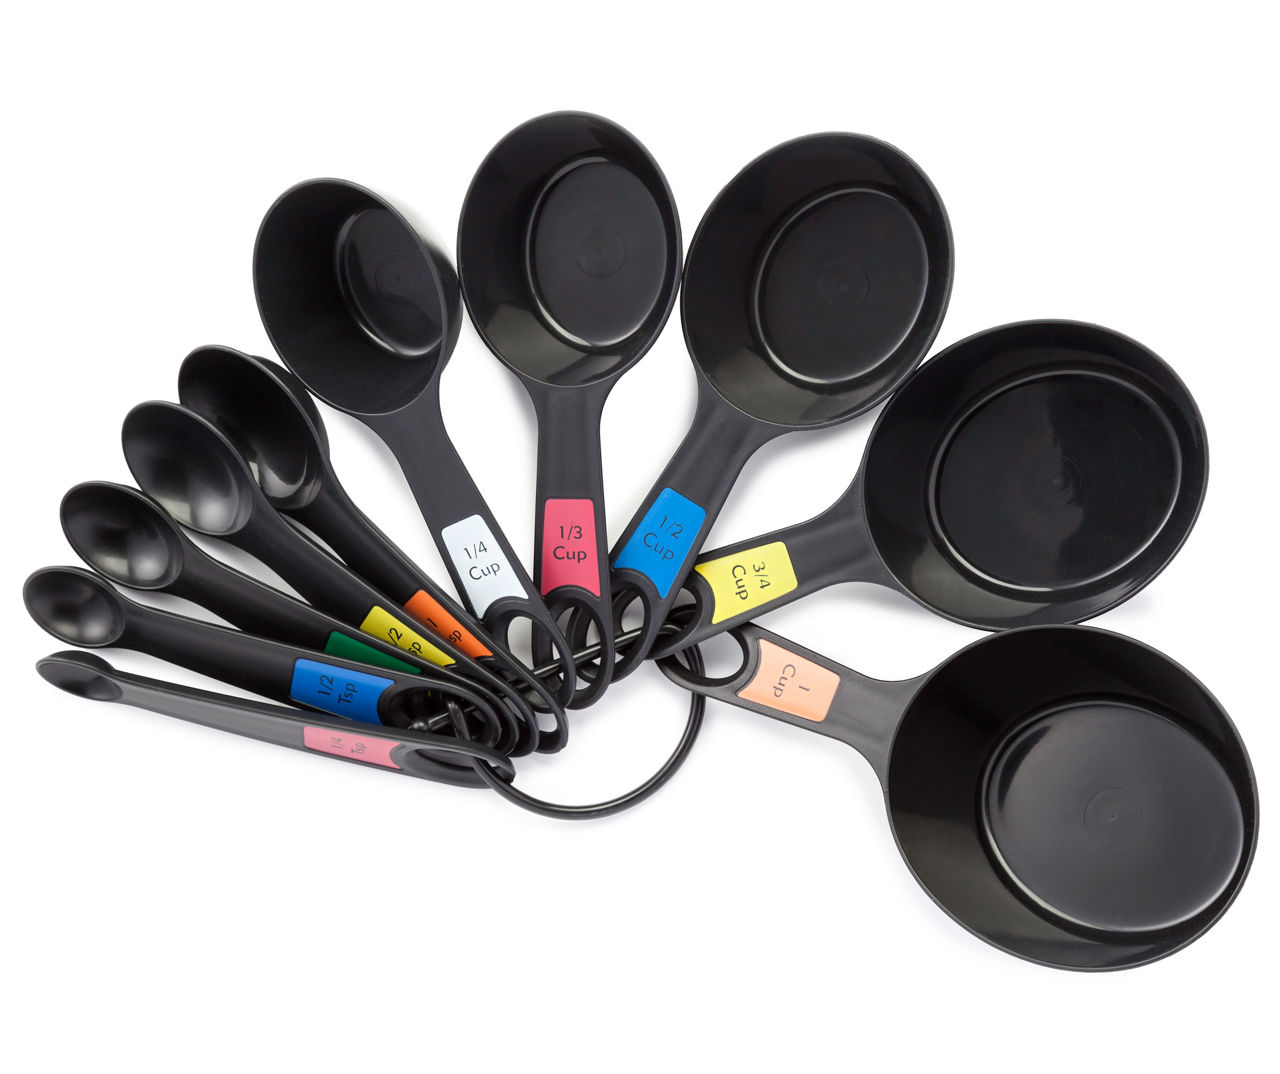 Farberware Measuring Spoons Durable Plastic Set Of 5 Kitchen Tools